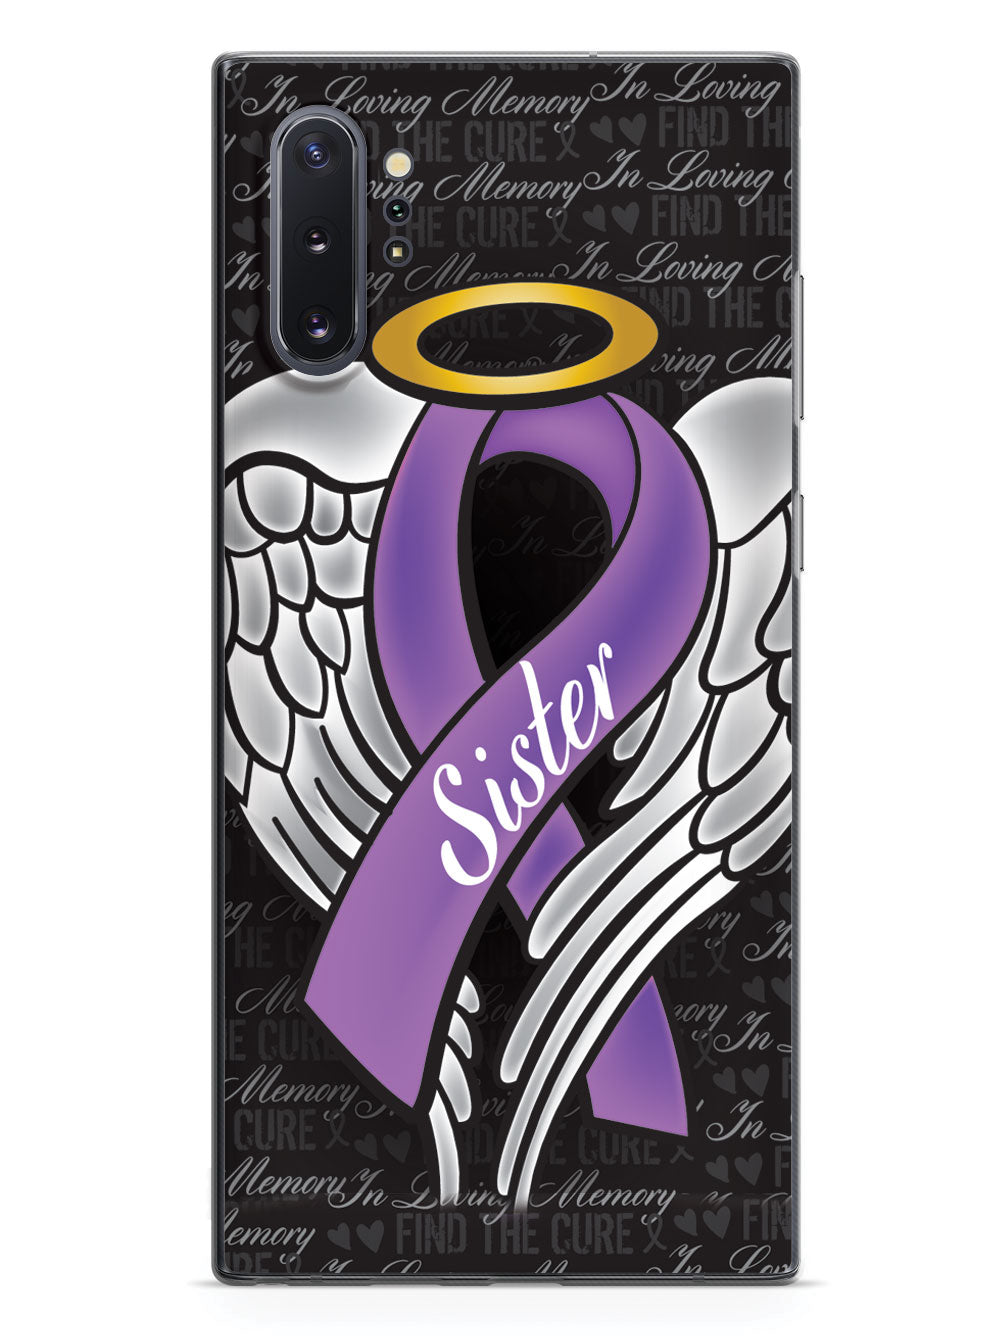 In Loving Memory of My Sister - Purple Ribbon Case